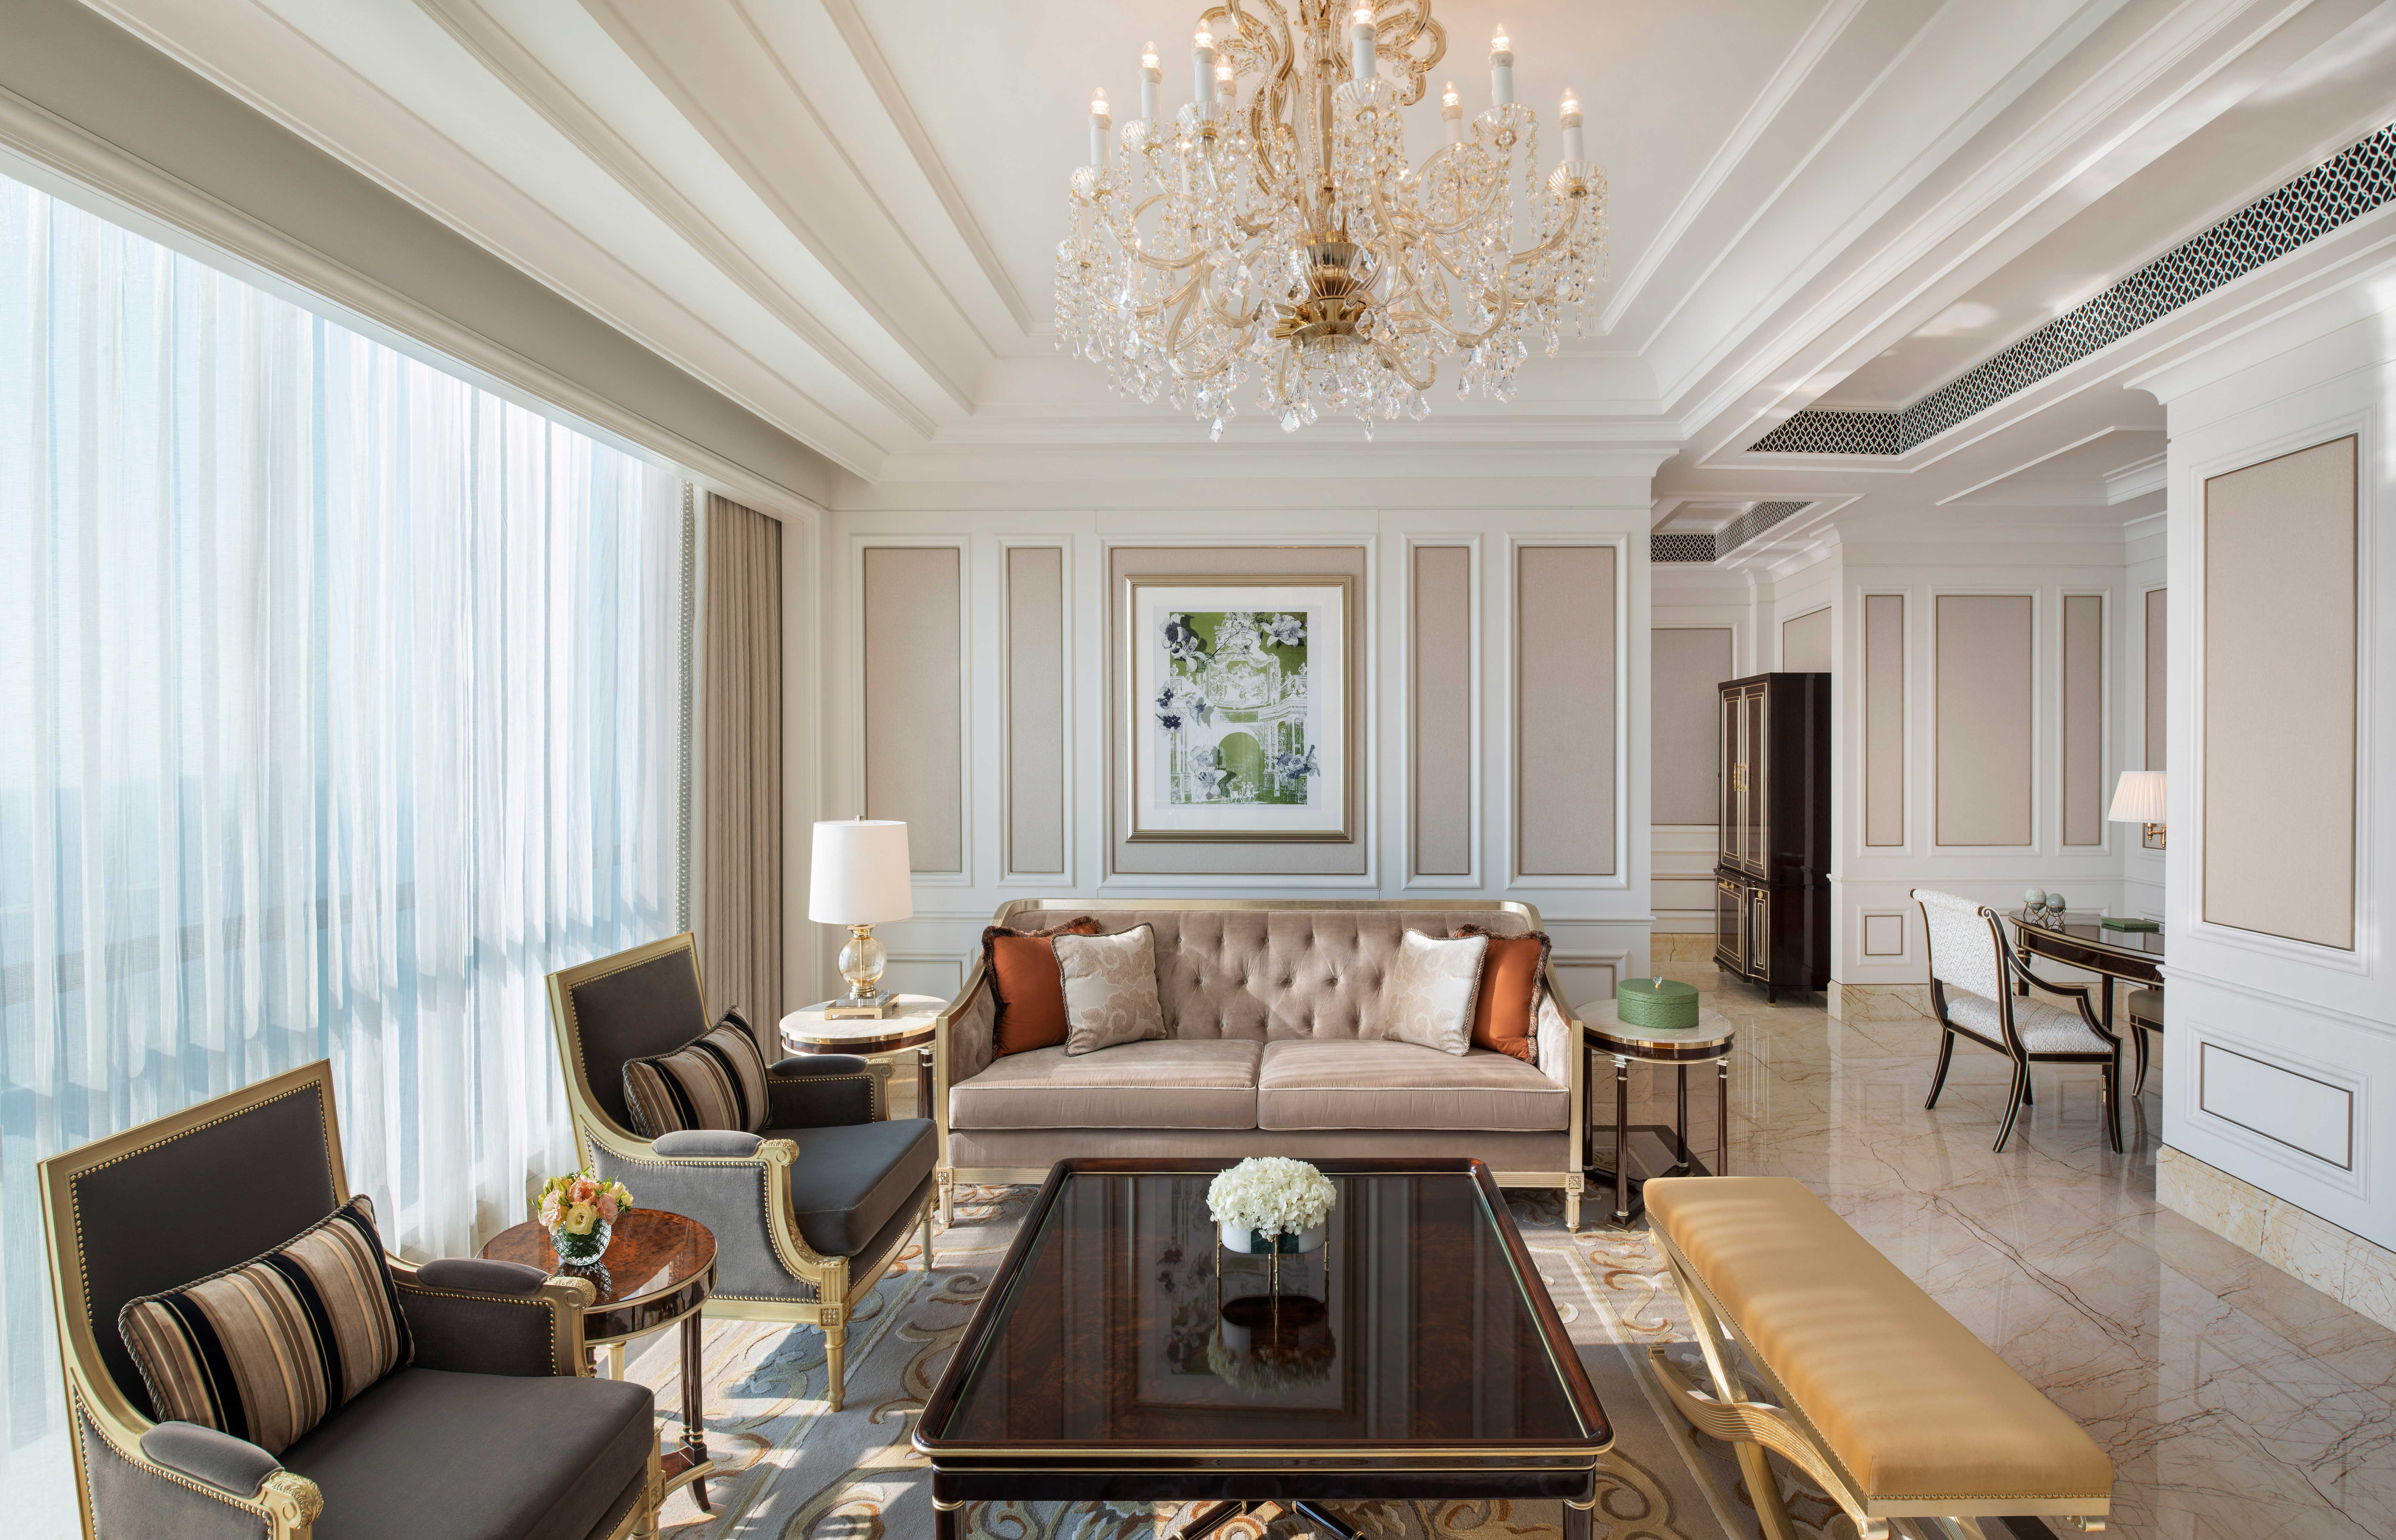 St. Regis Hotel Zhuhai brings its grandeur to China - Construction Plus ...